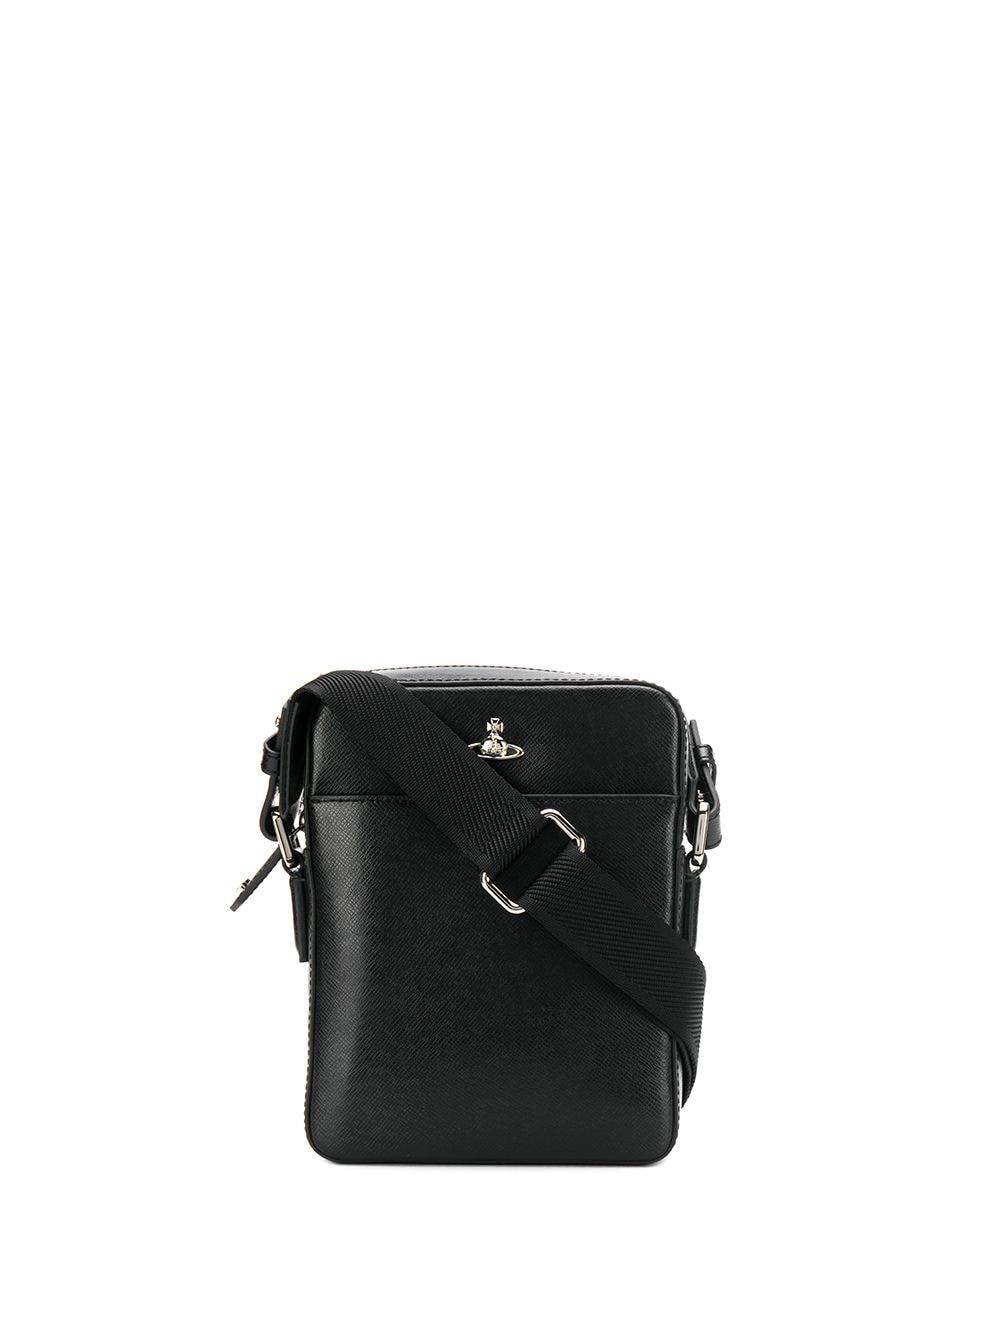 фото Vivienne Westwood сумка через плечо с металлическим логотипом